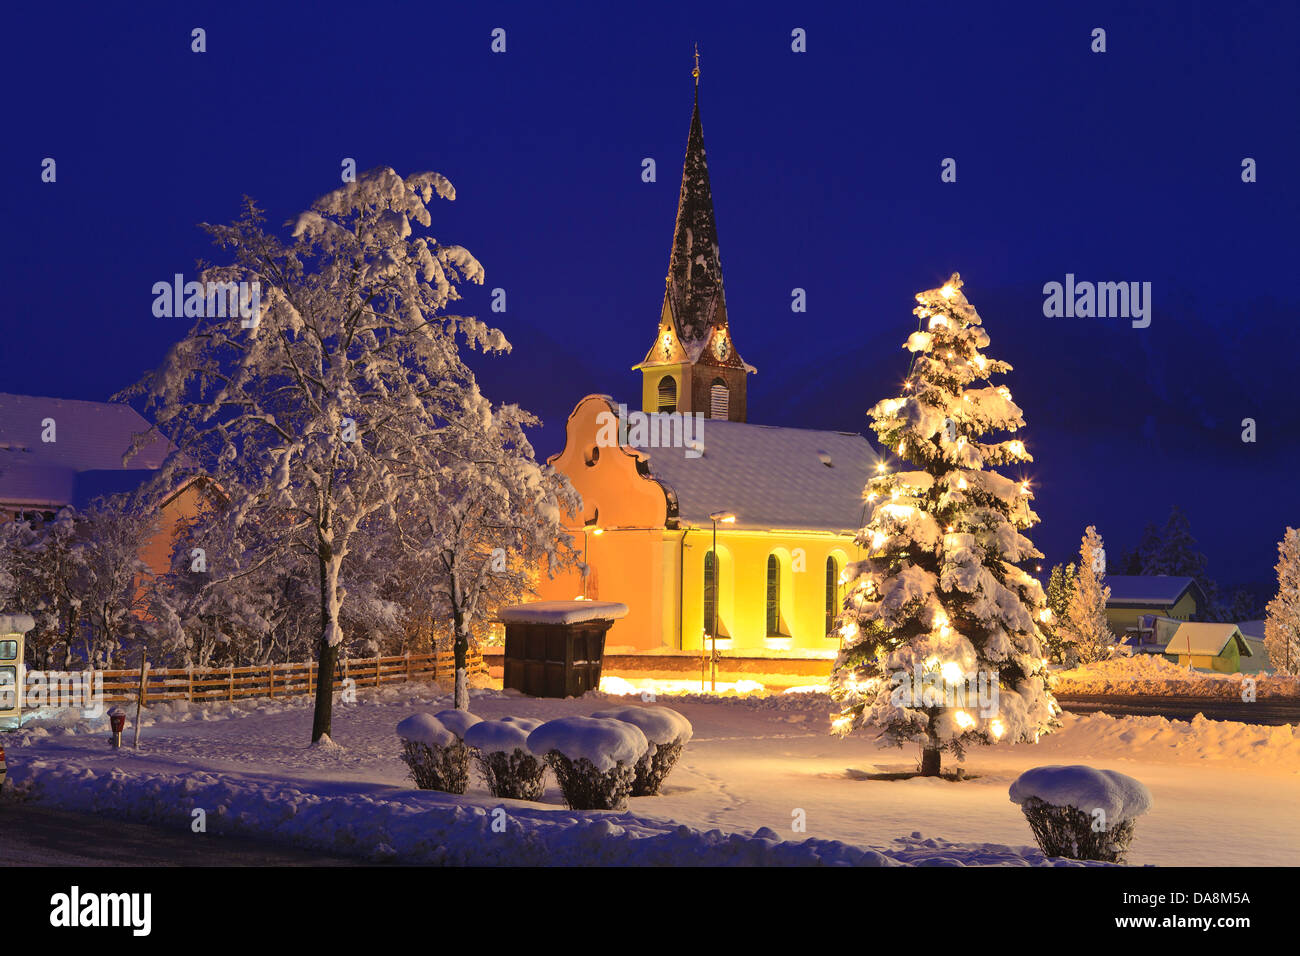 Austria, Europe, Tyrol, Mieminger plateau, Obsteig, church, tree, Christmas tree, trees, snow, winter, Christmas mood, lights, b Stock Photo